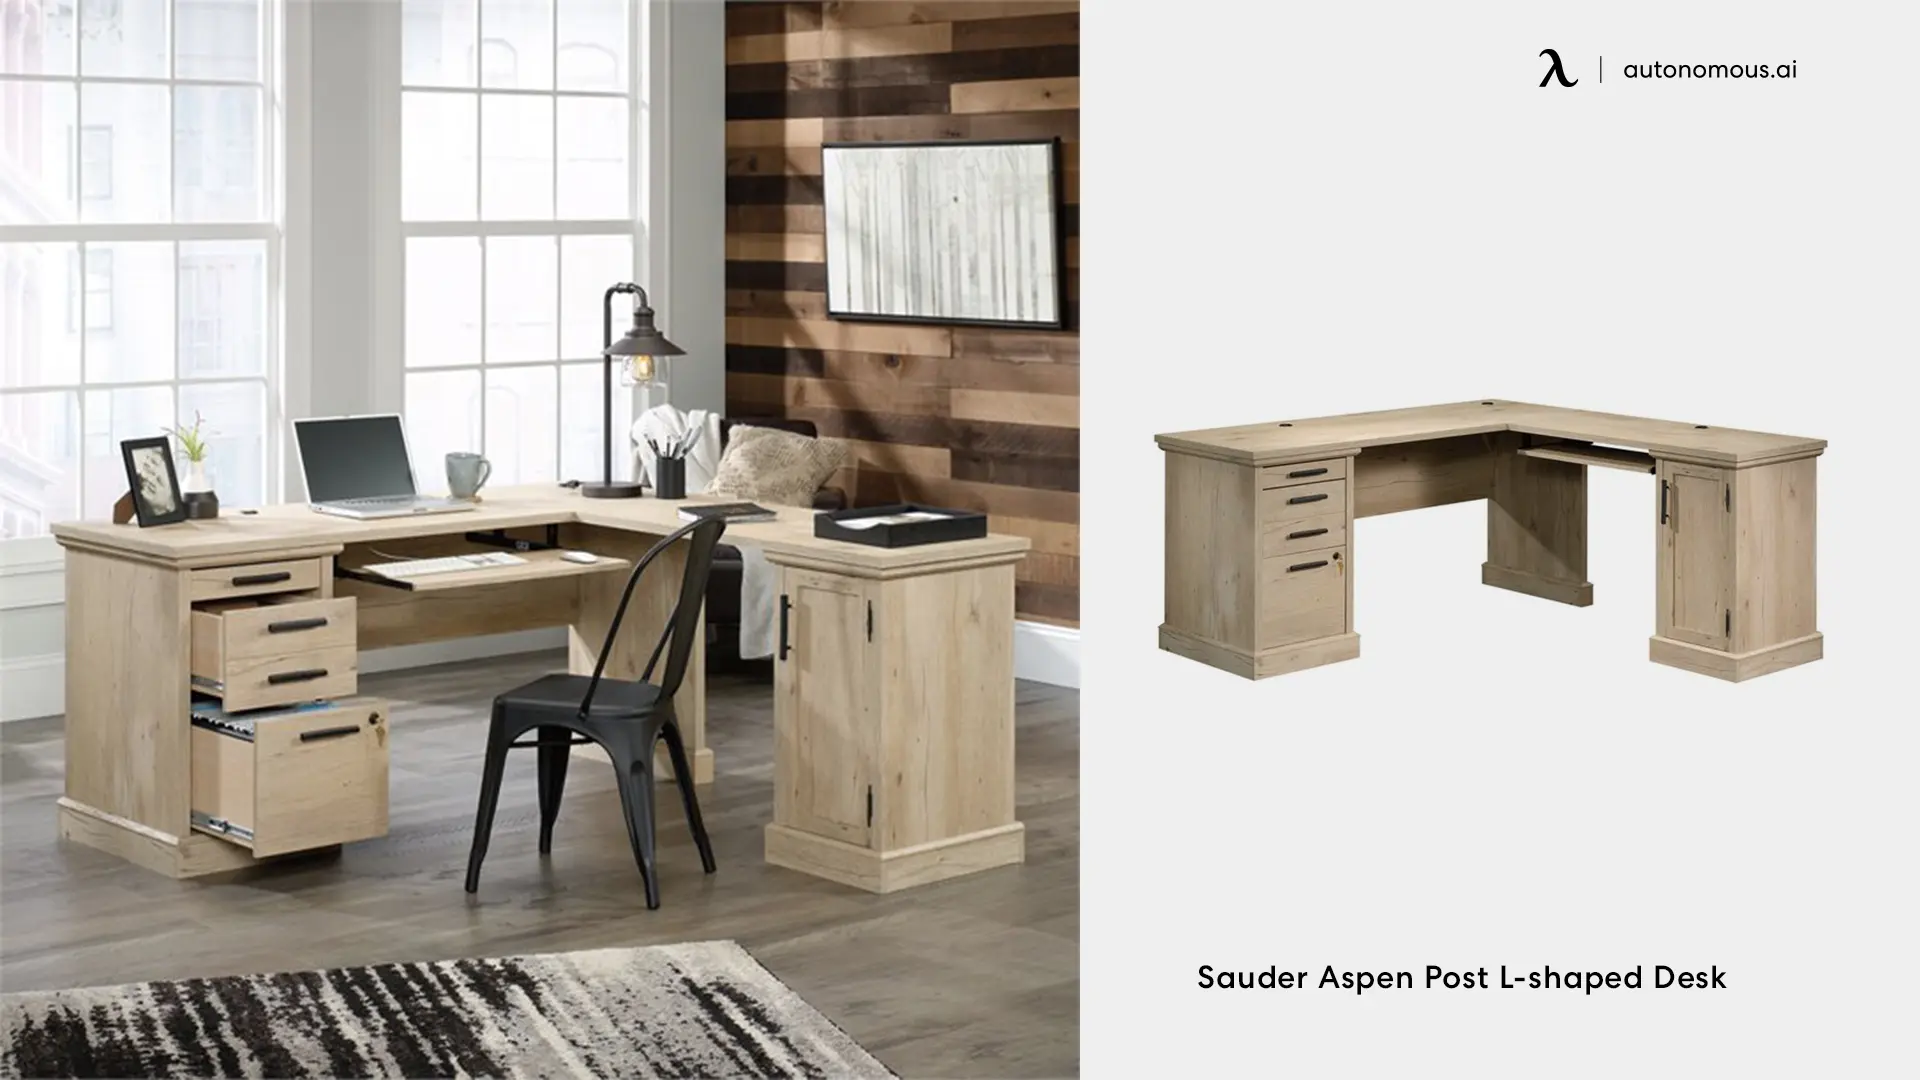 Sauder Aspen Post L-shaped Desk